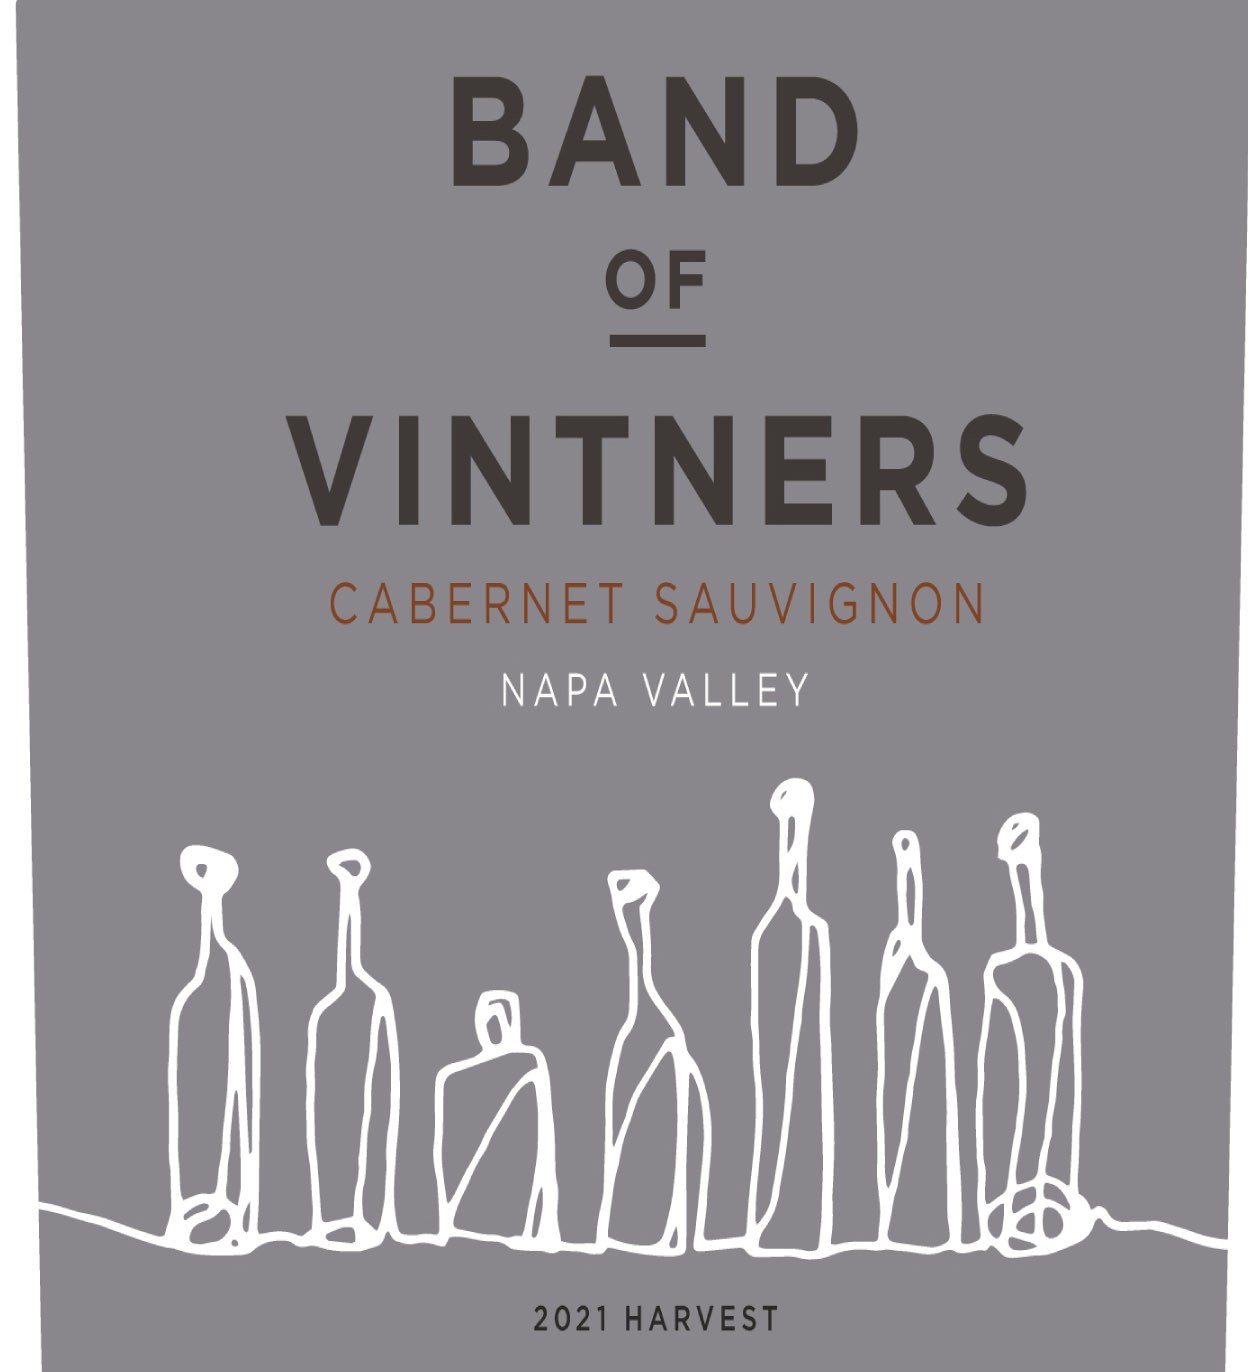 Band of Vintners - Cabernet Sauvignon label